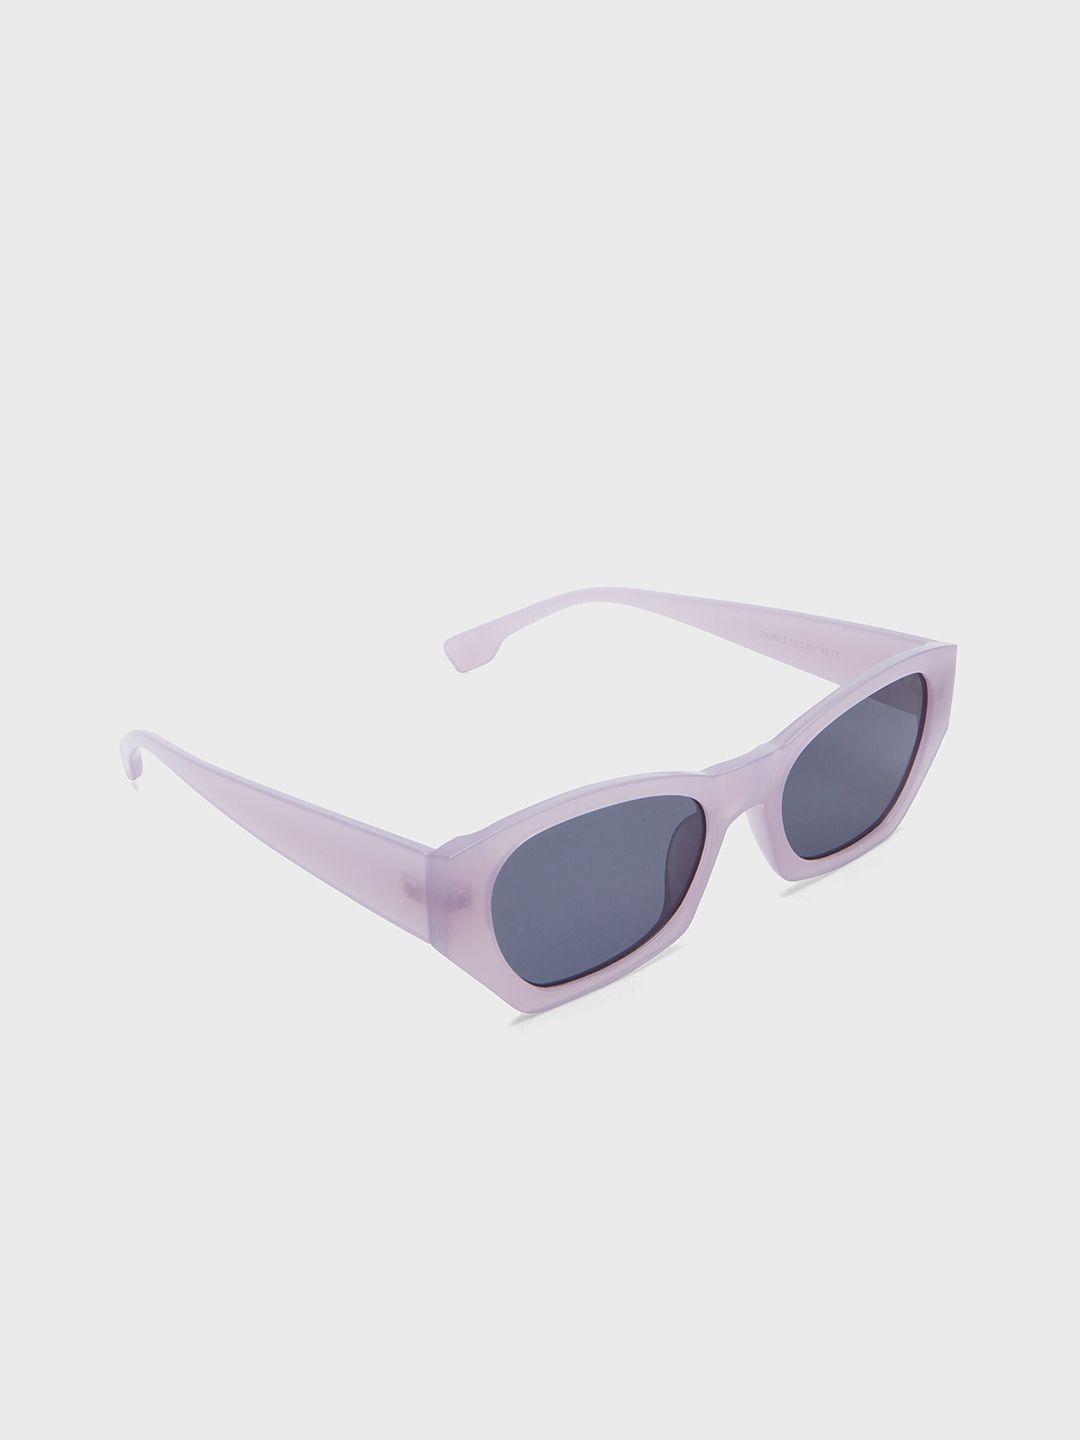 20dresses women oval acrylic sunglasses with regular lens sg010774